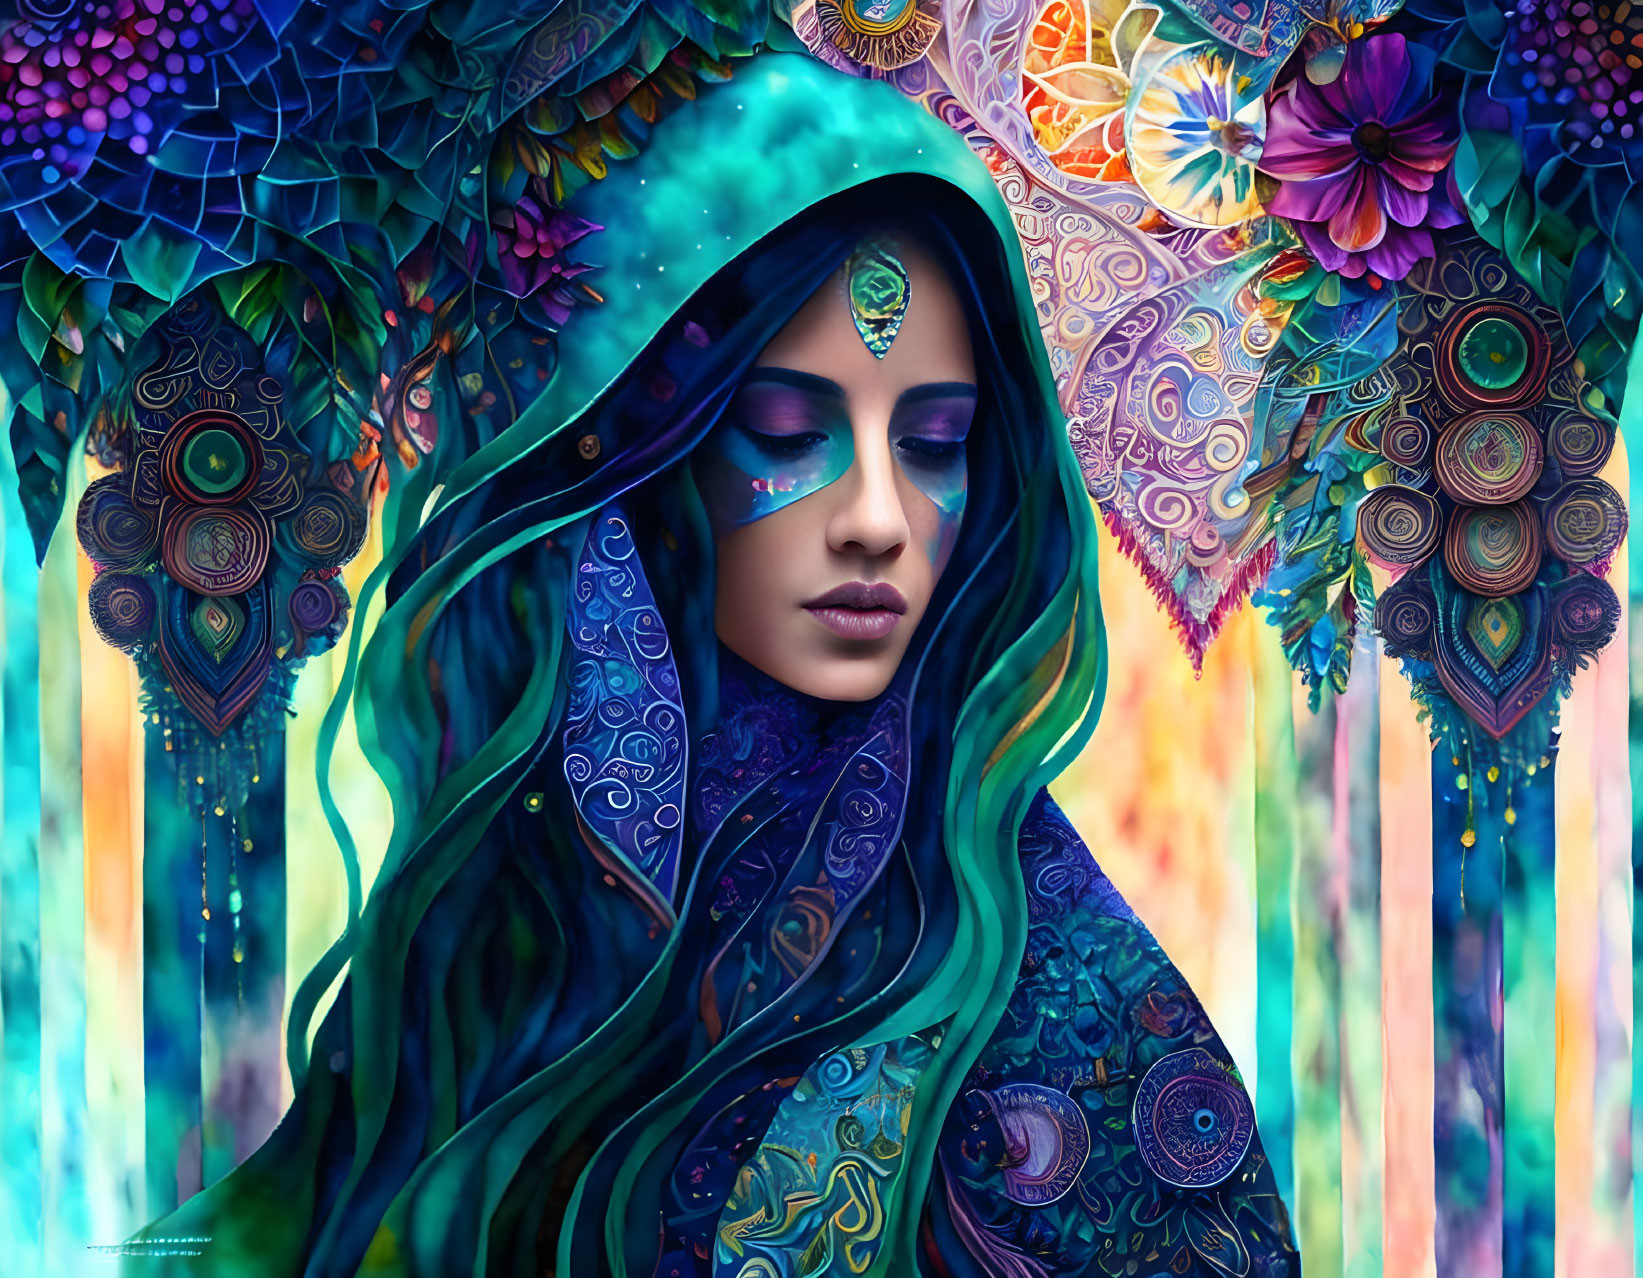 Decorative headscarf woman in vibrant, colorful setting